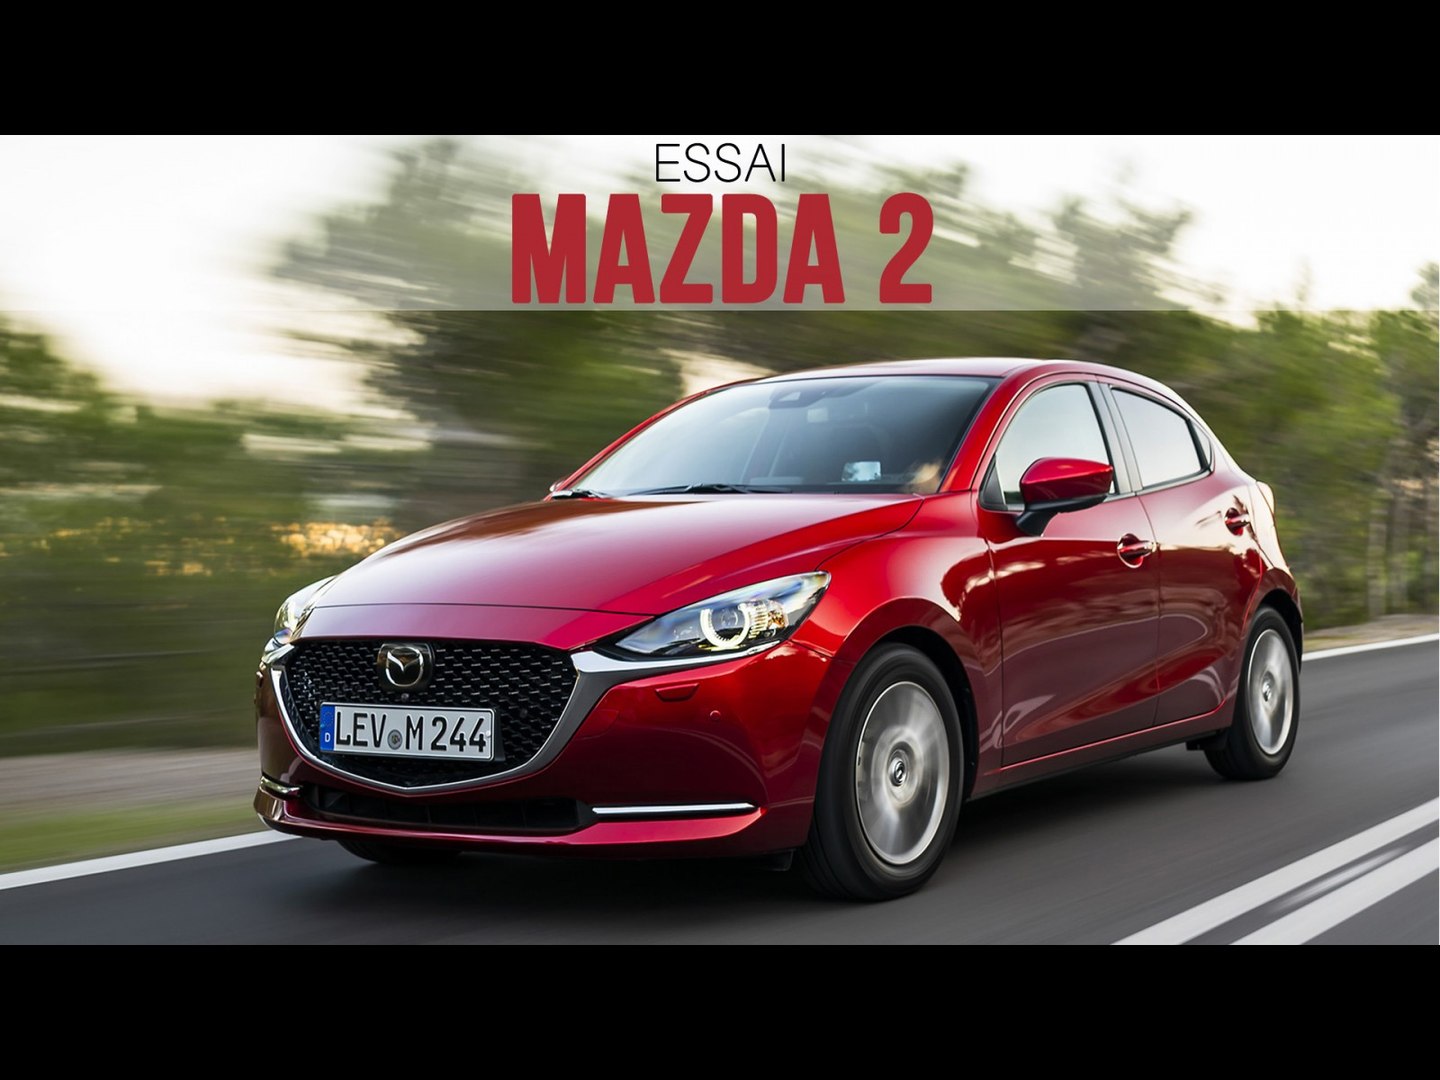 Essai Mazda 2 1.5 l SkyActiv-G 90 2020 - Vidéo Dailymotion